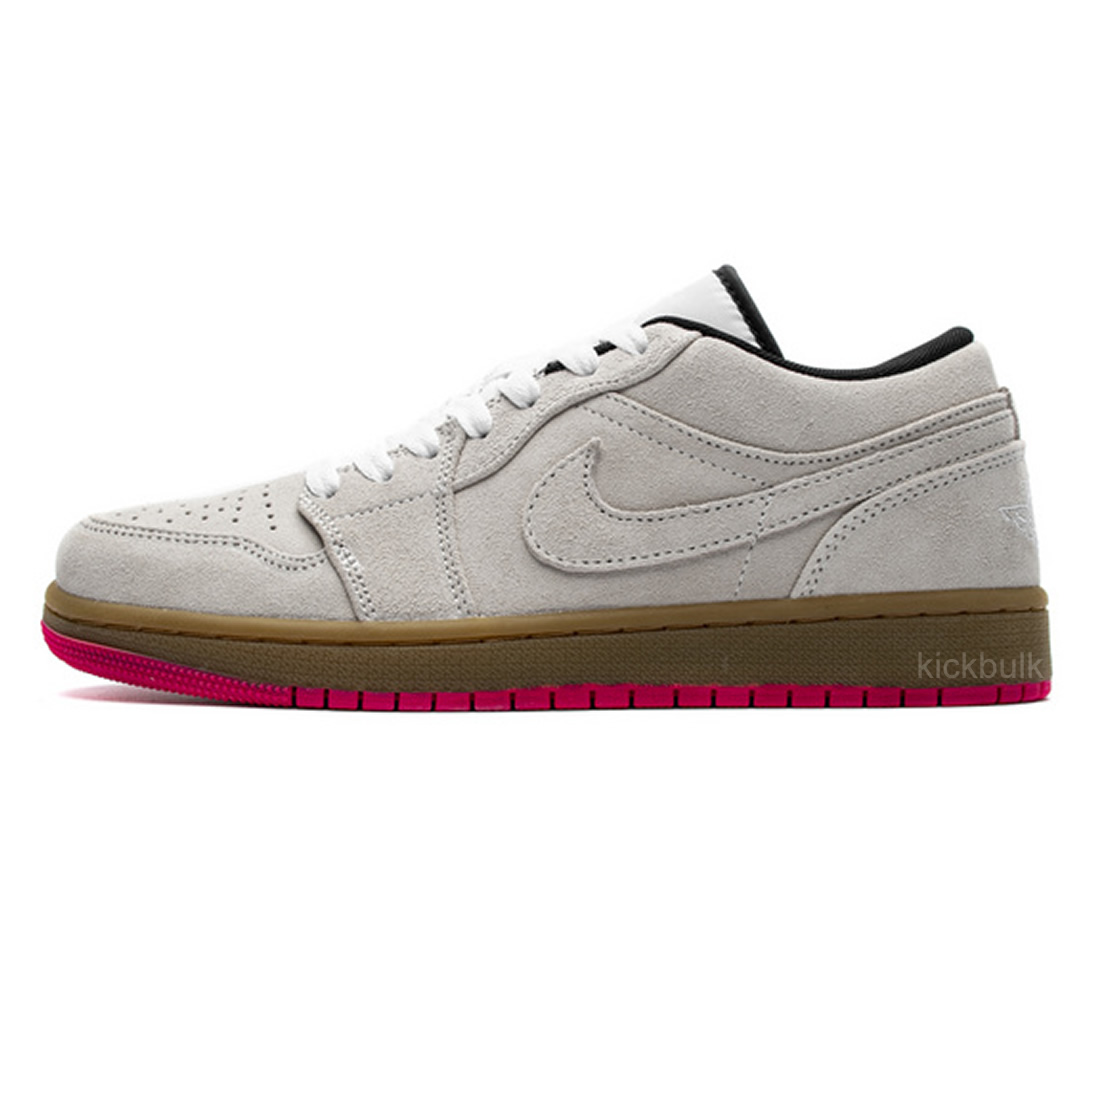 Nike Air Jordan 1 Low Hyper Pink 553558 119 1 - kickbulk.co